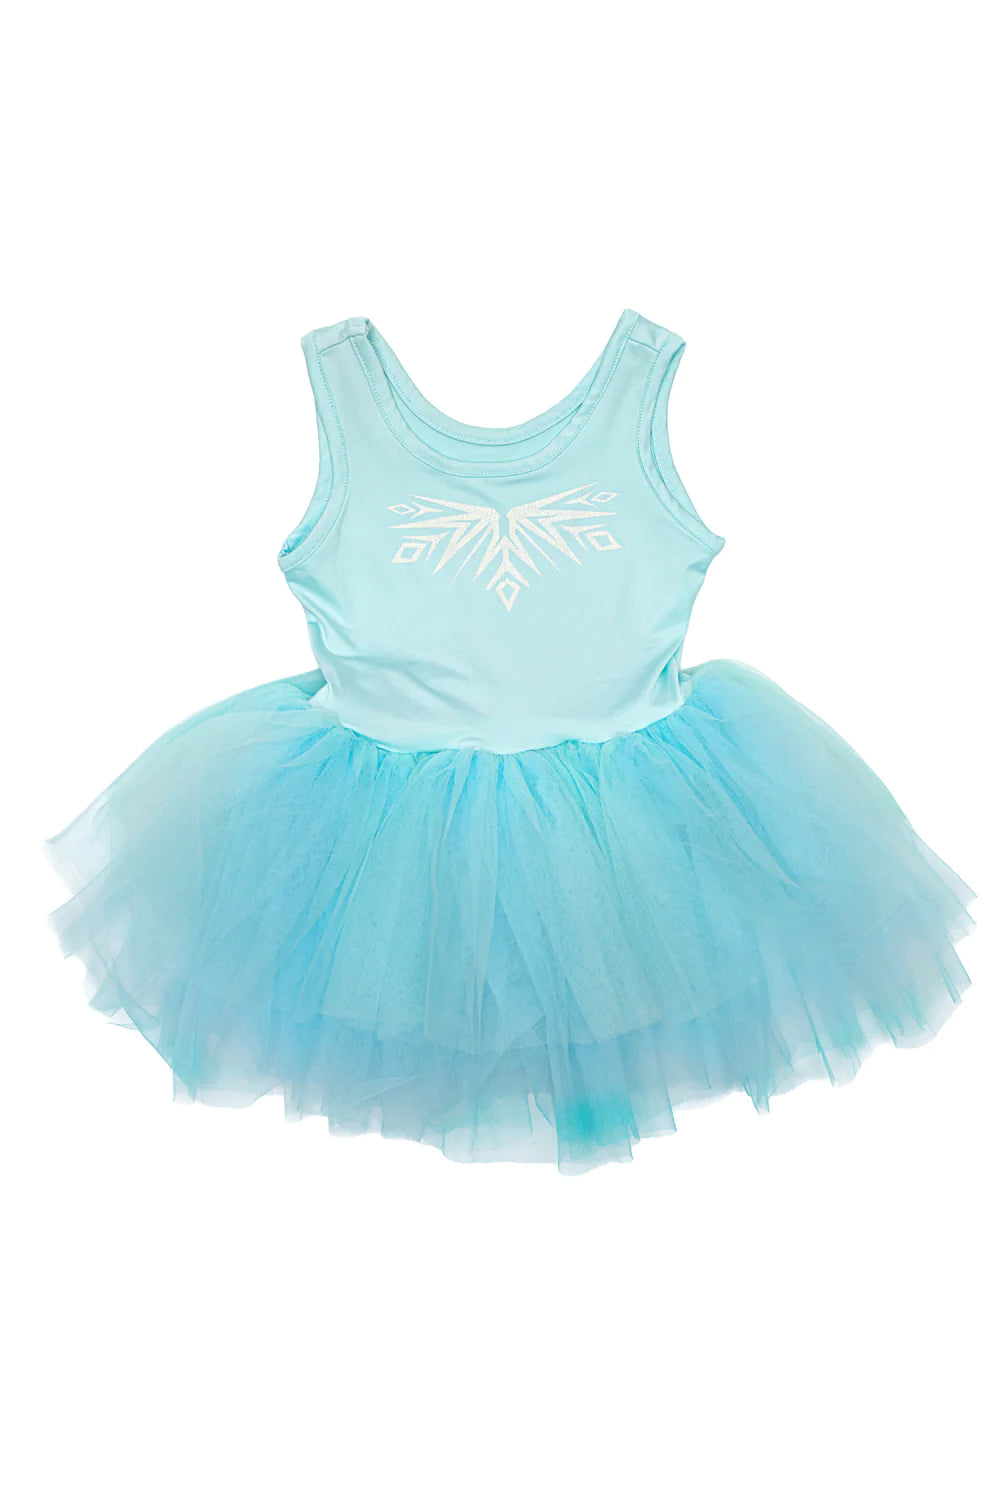 Elsa Ballet Tutu Dress - LT Blue